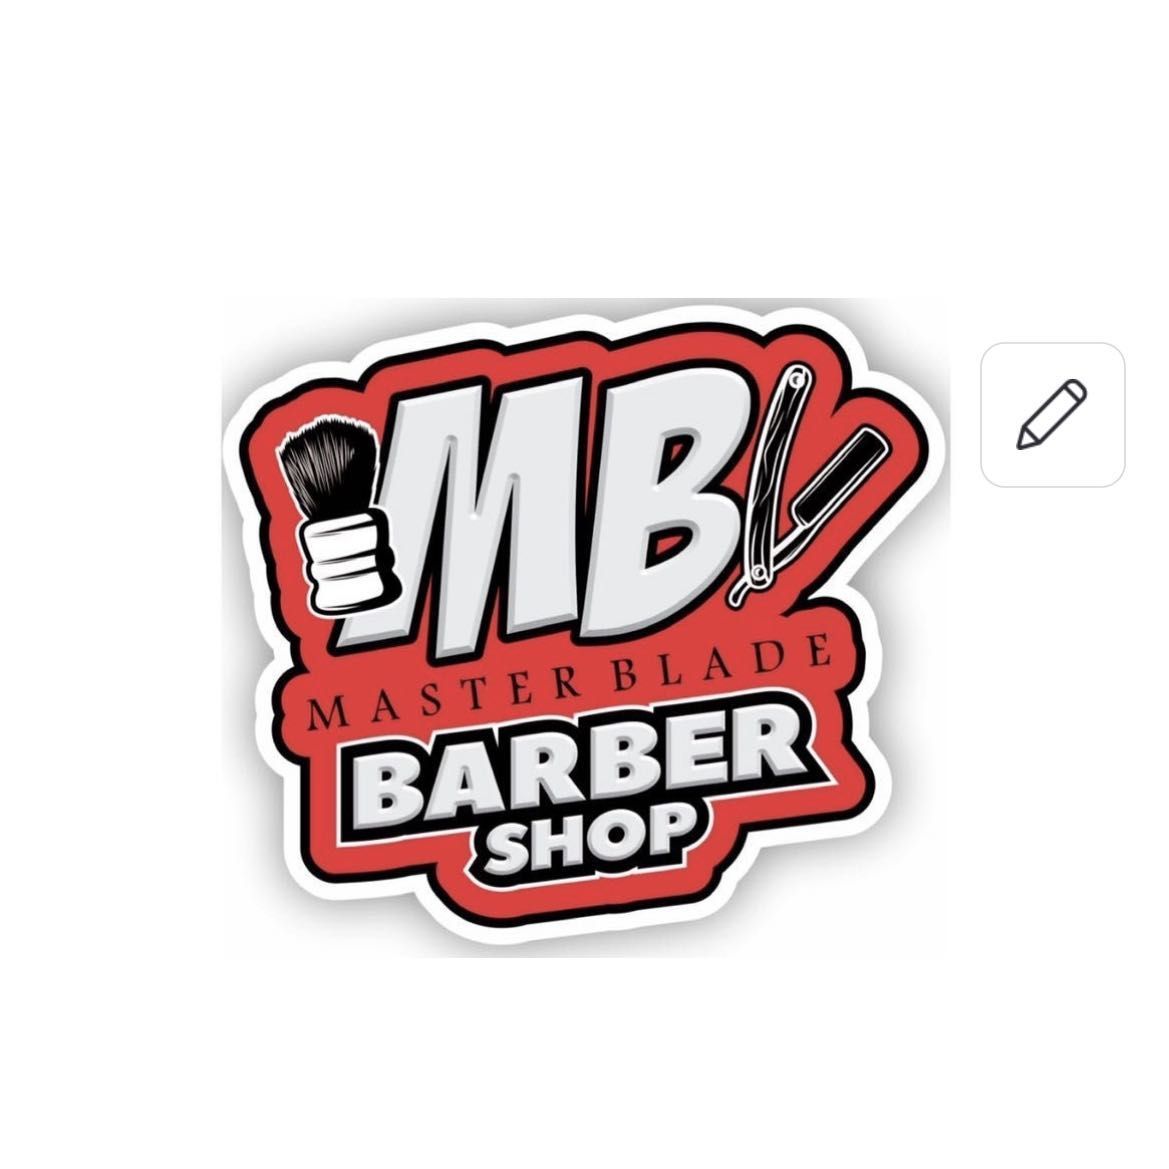 Master Blade Barbershop, 903 Bergenline Ave, Union City, 07087